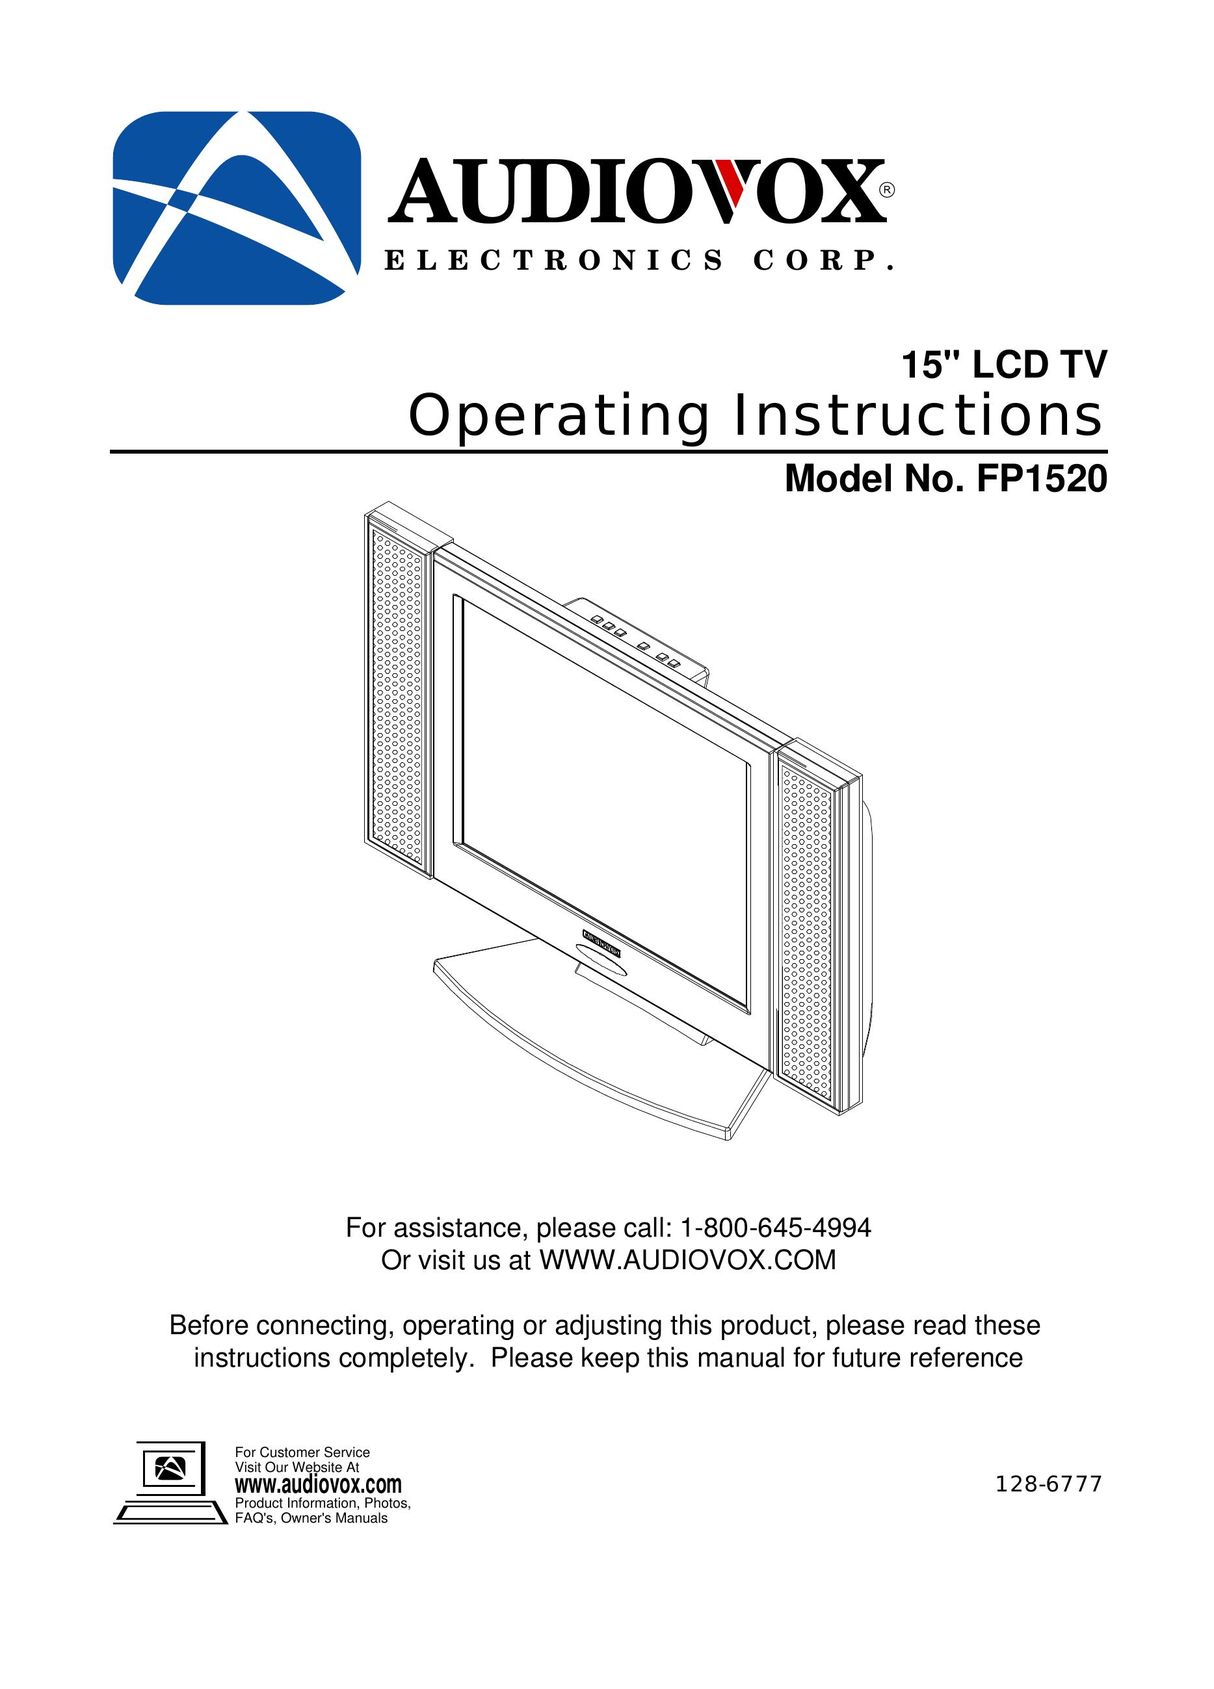 Audiovox FP1520 Flat Panel Television User Manual